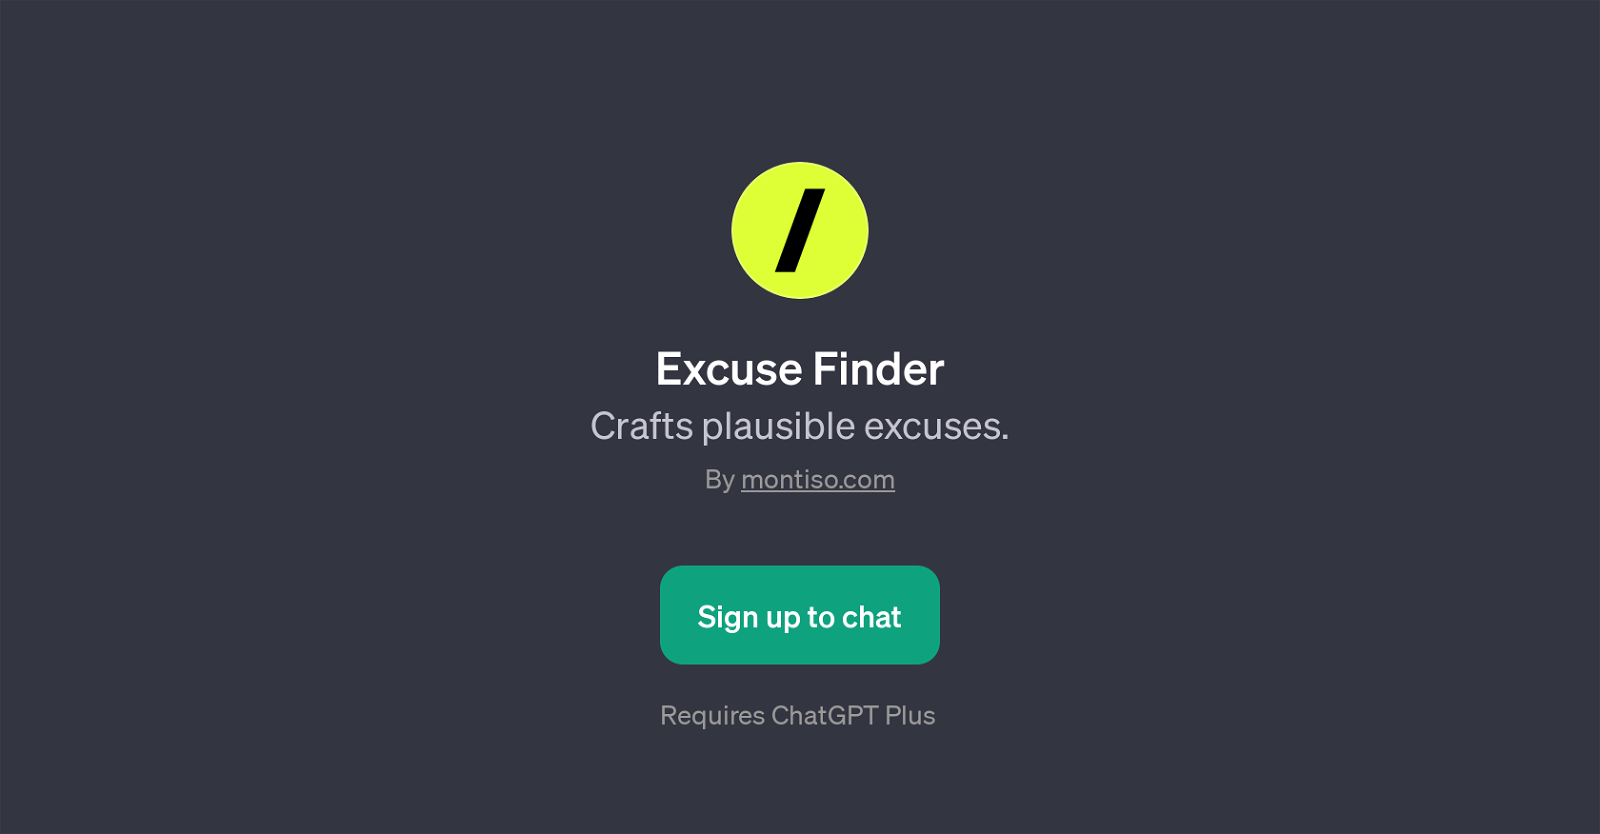 Excuse Finder website